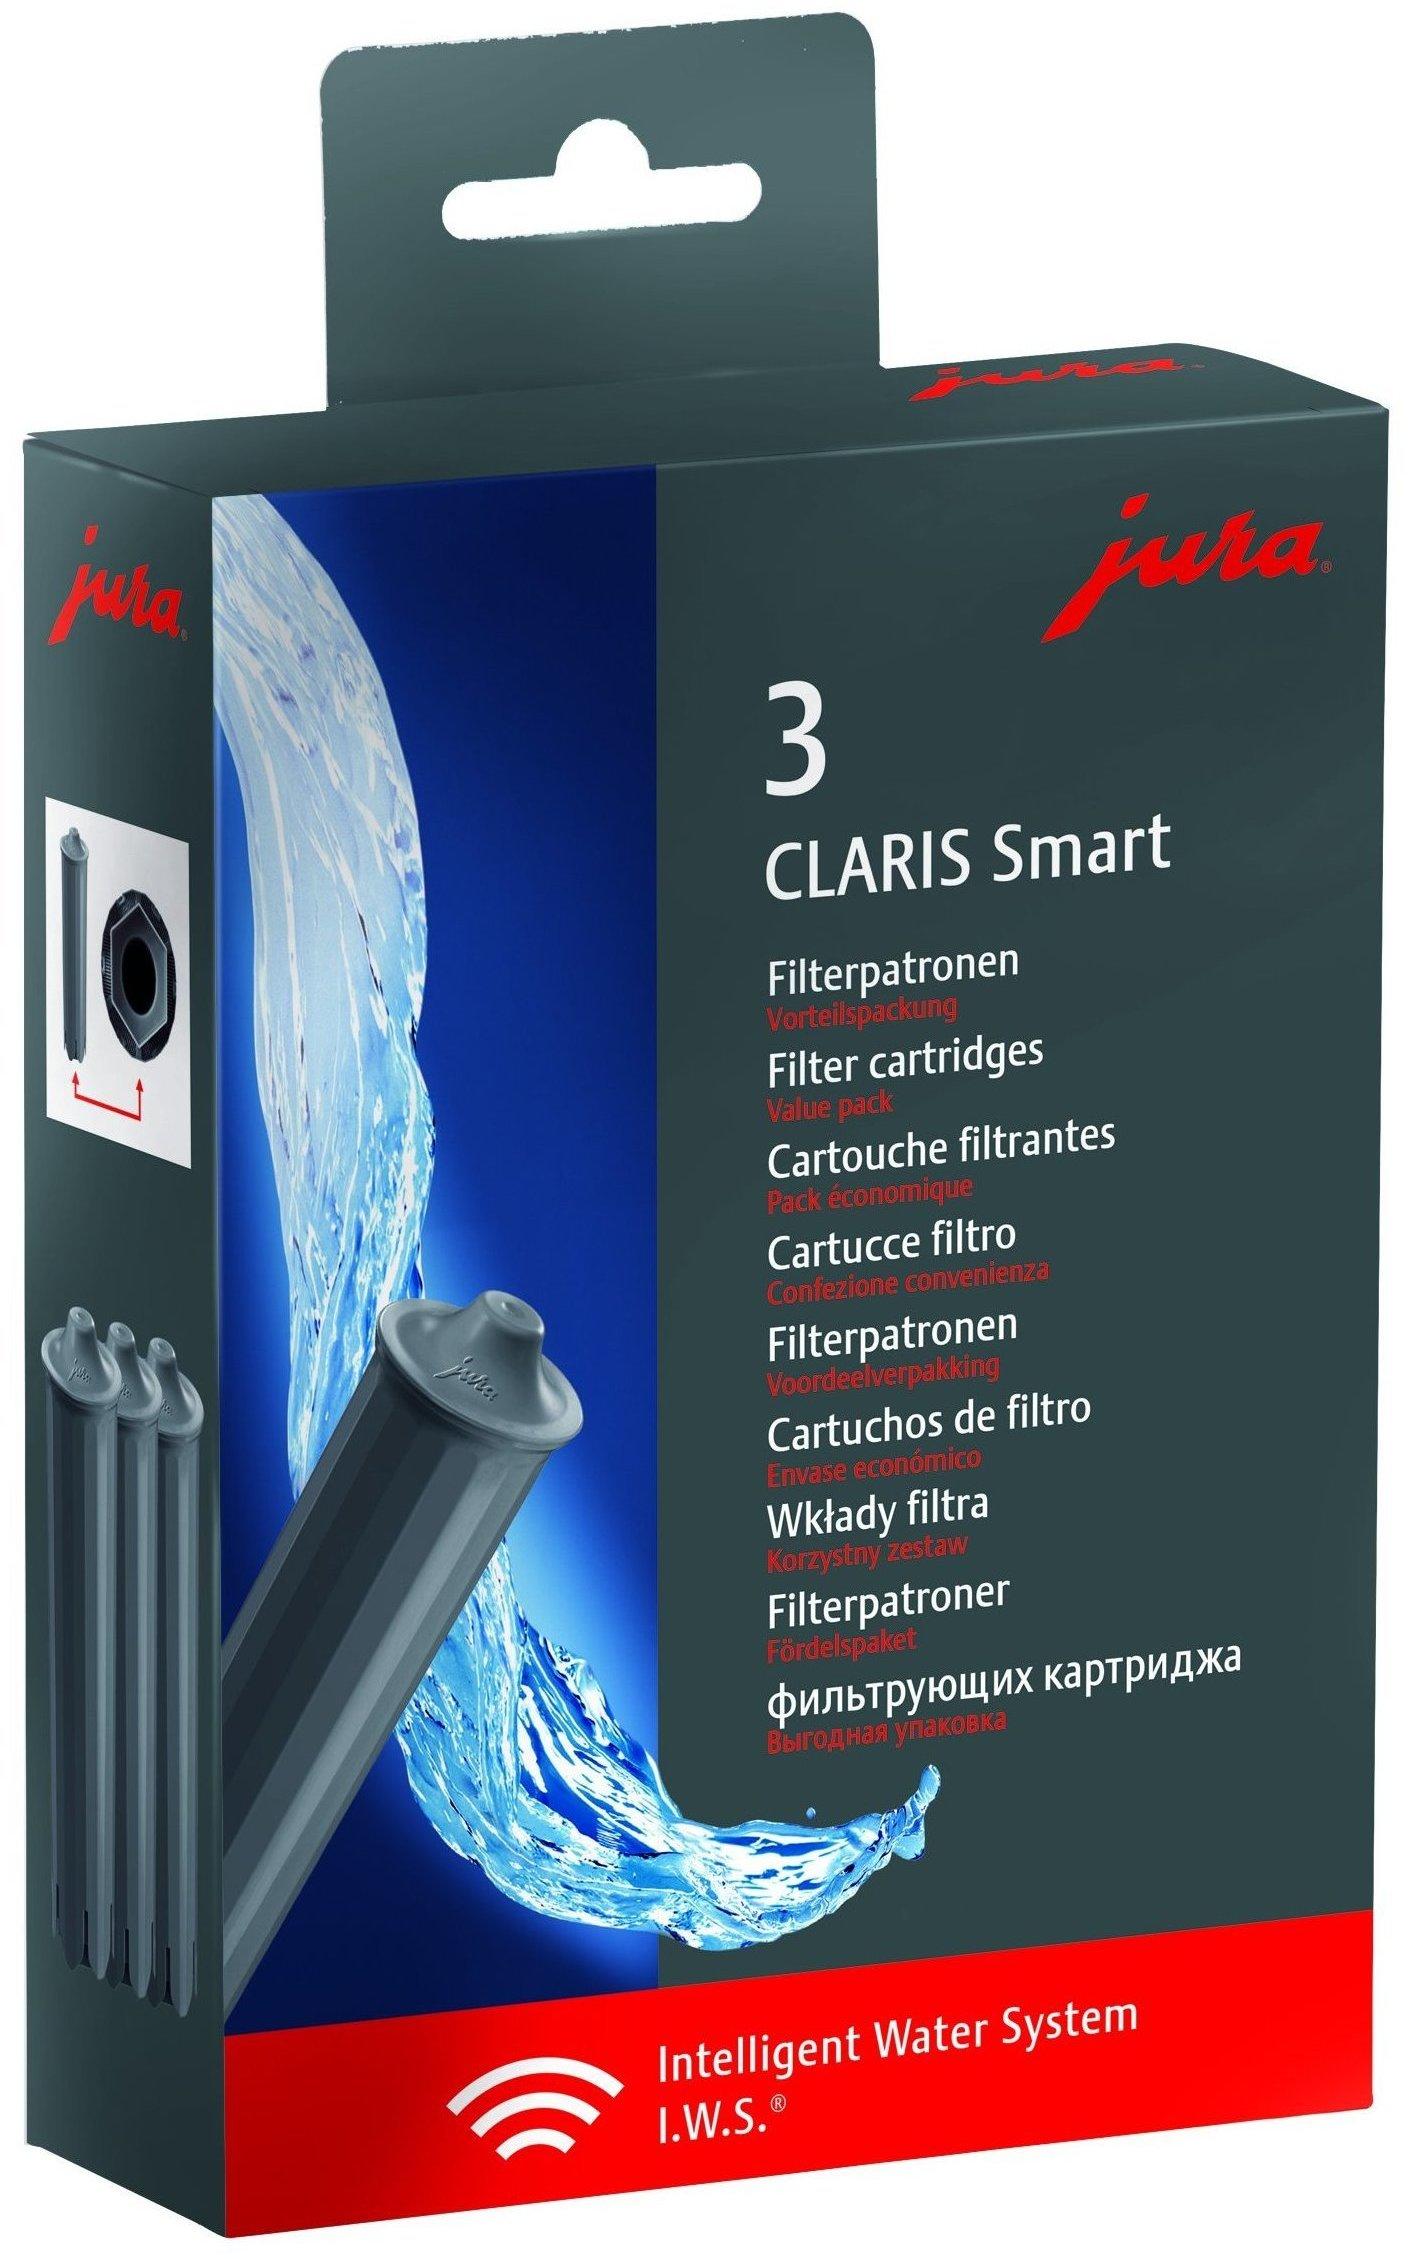 Jura Claris Smart 3er-Set Test ❤️ Testbericht.de Februar 2022